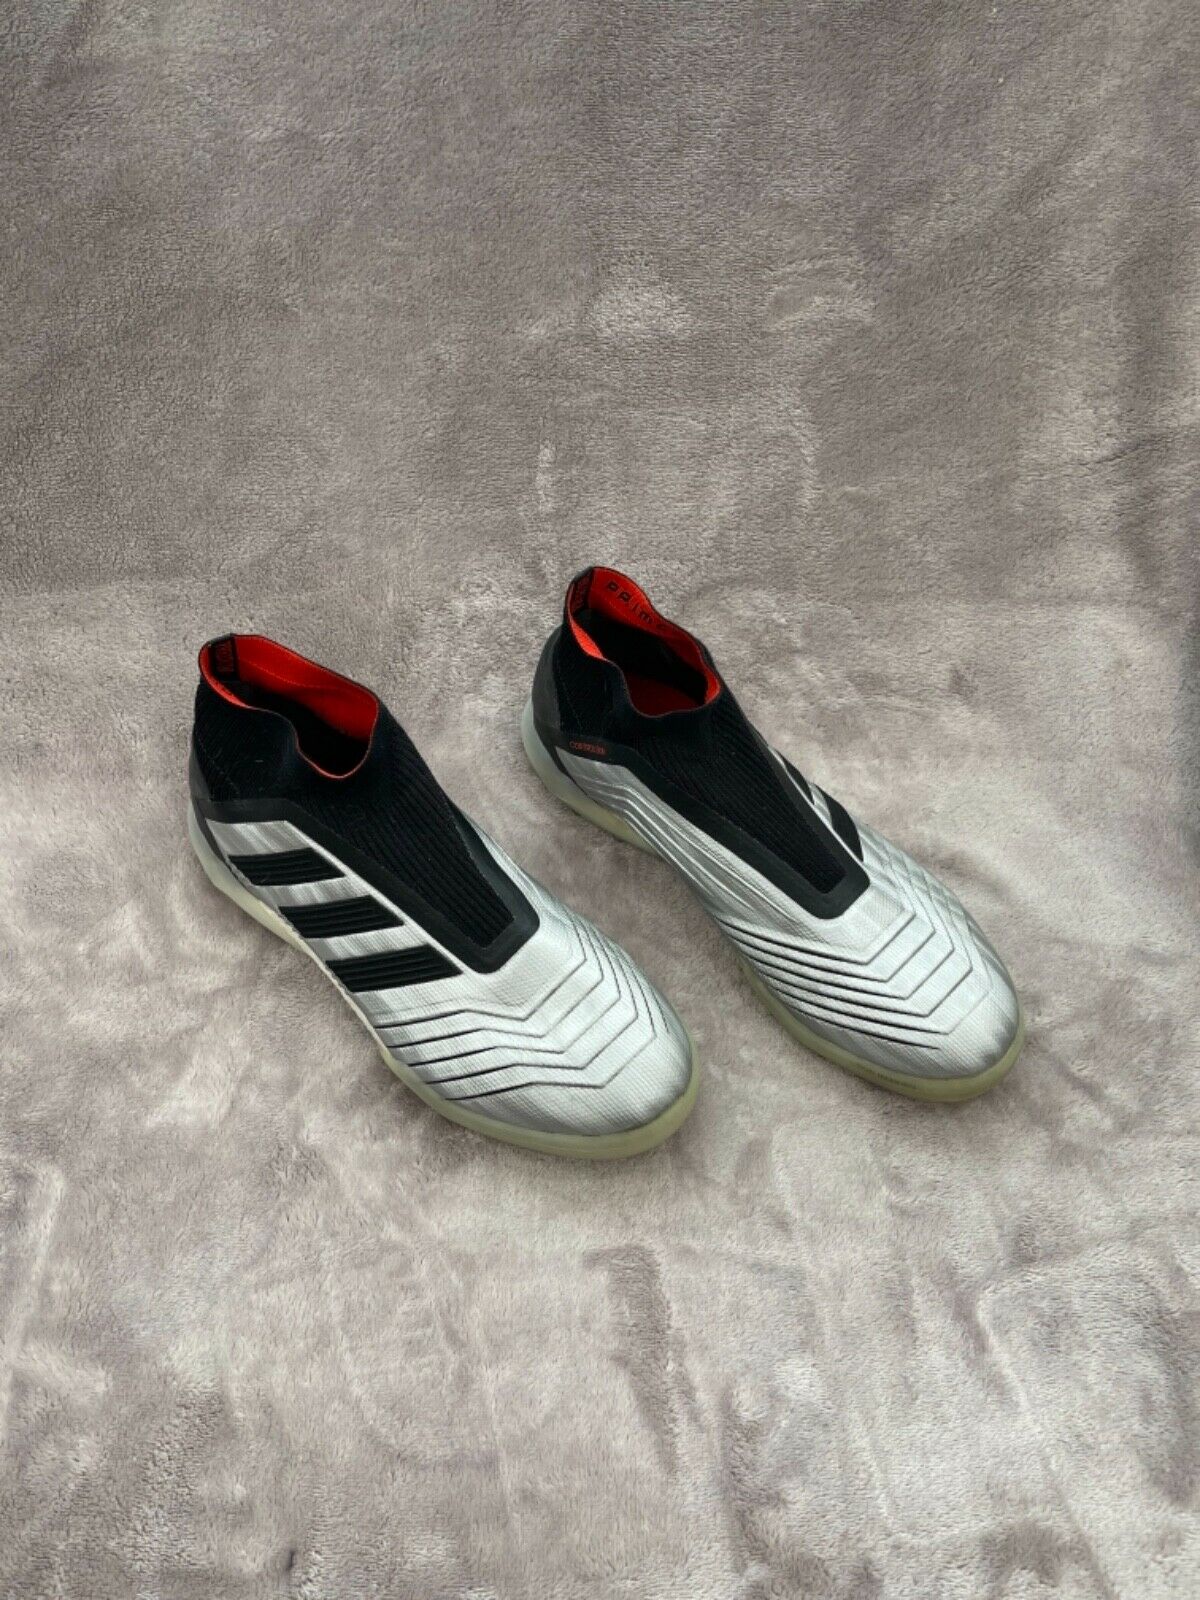 Adidas Predator Tango 19+ Turf Indoor Men’s Soccer Shoes - Size 10.5